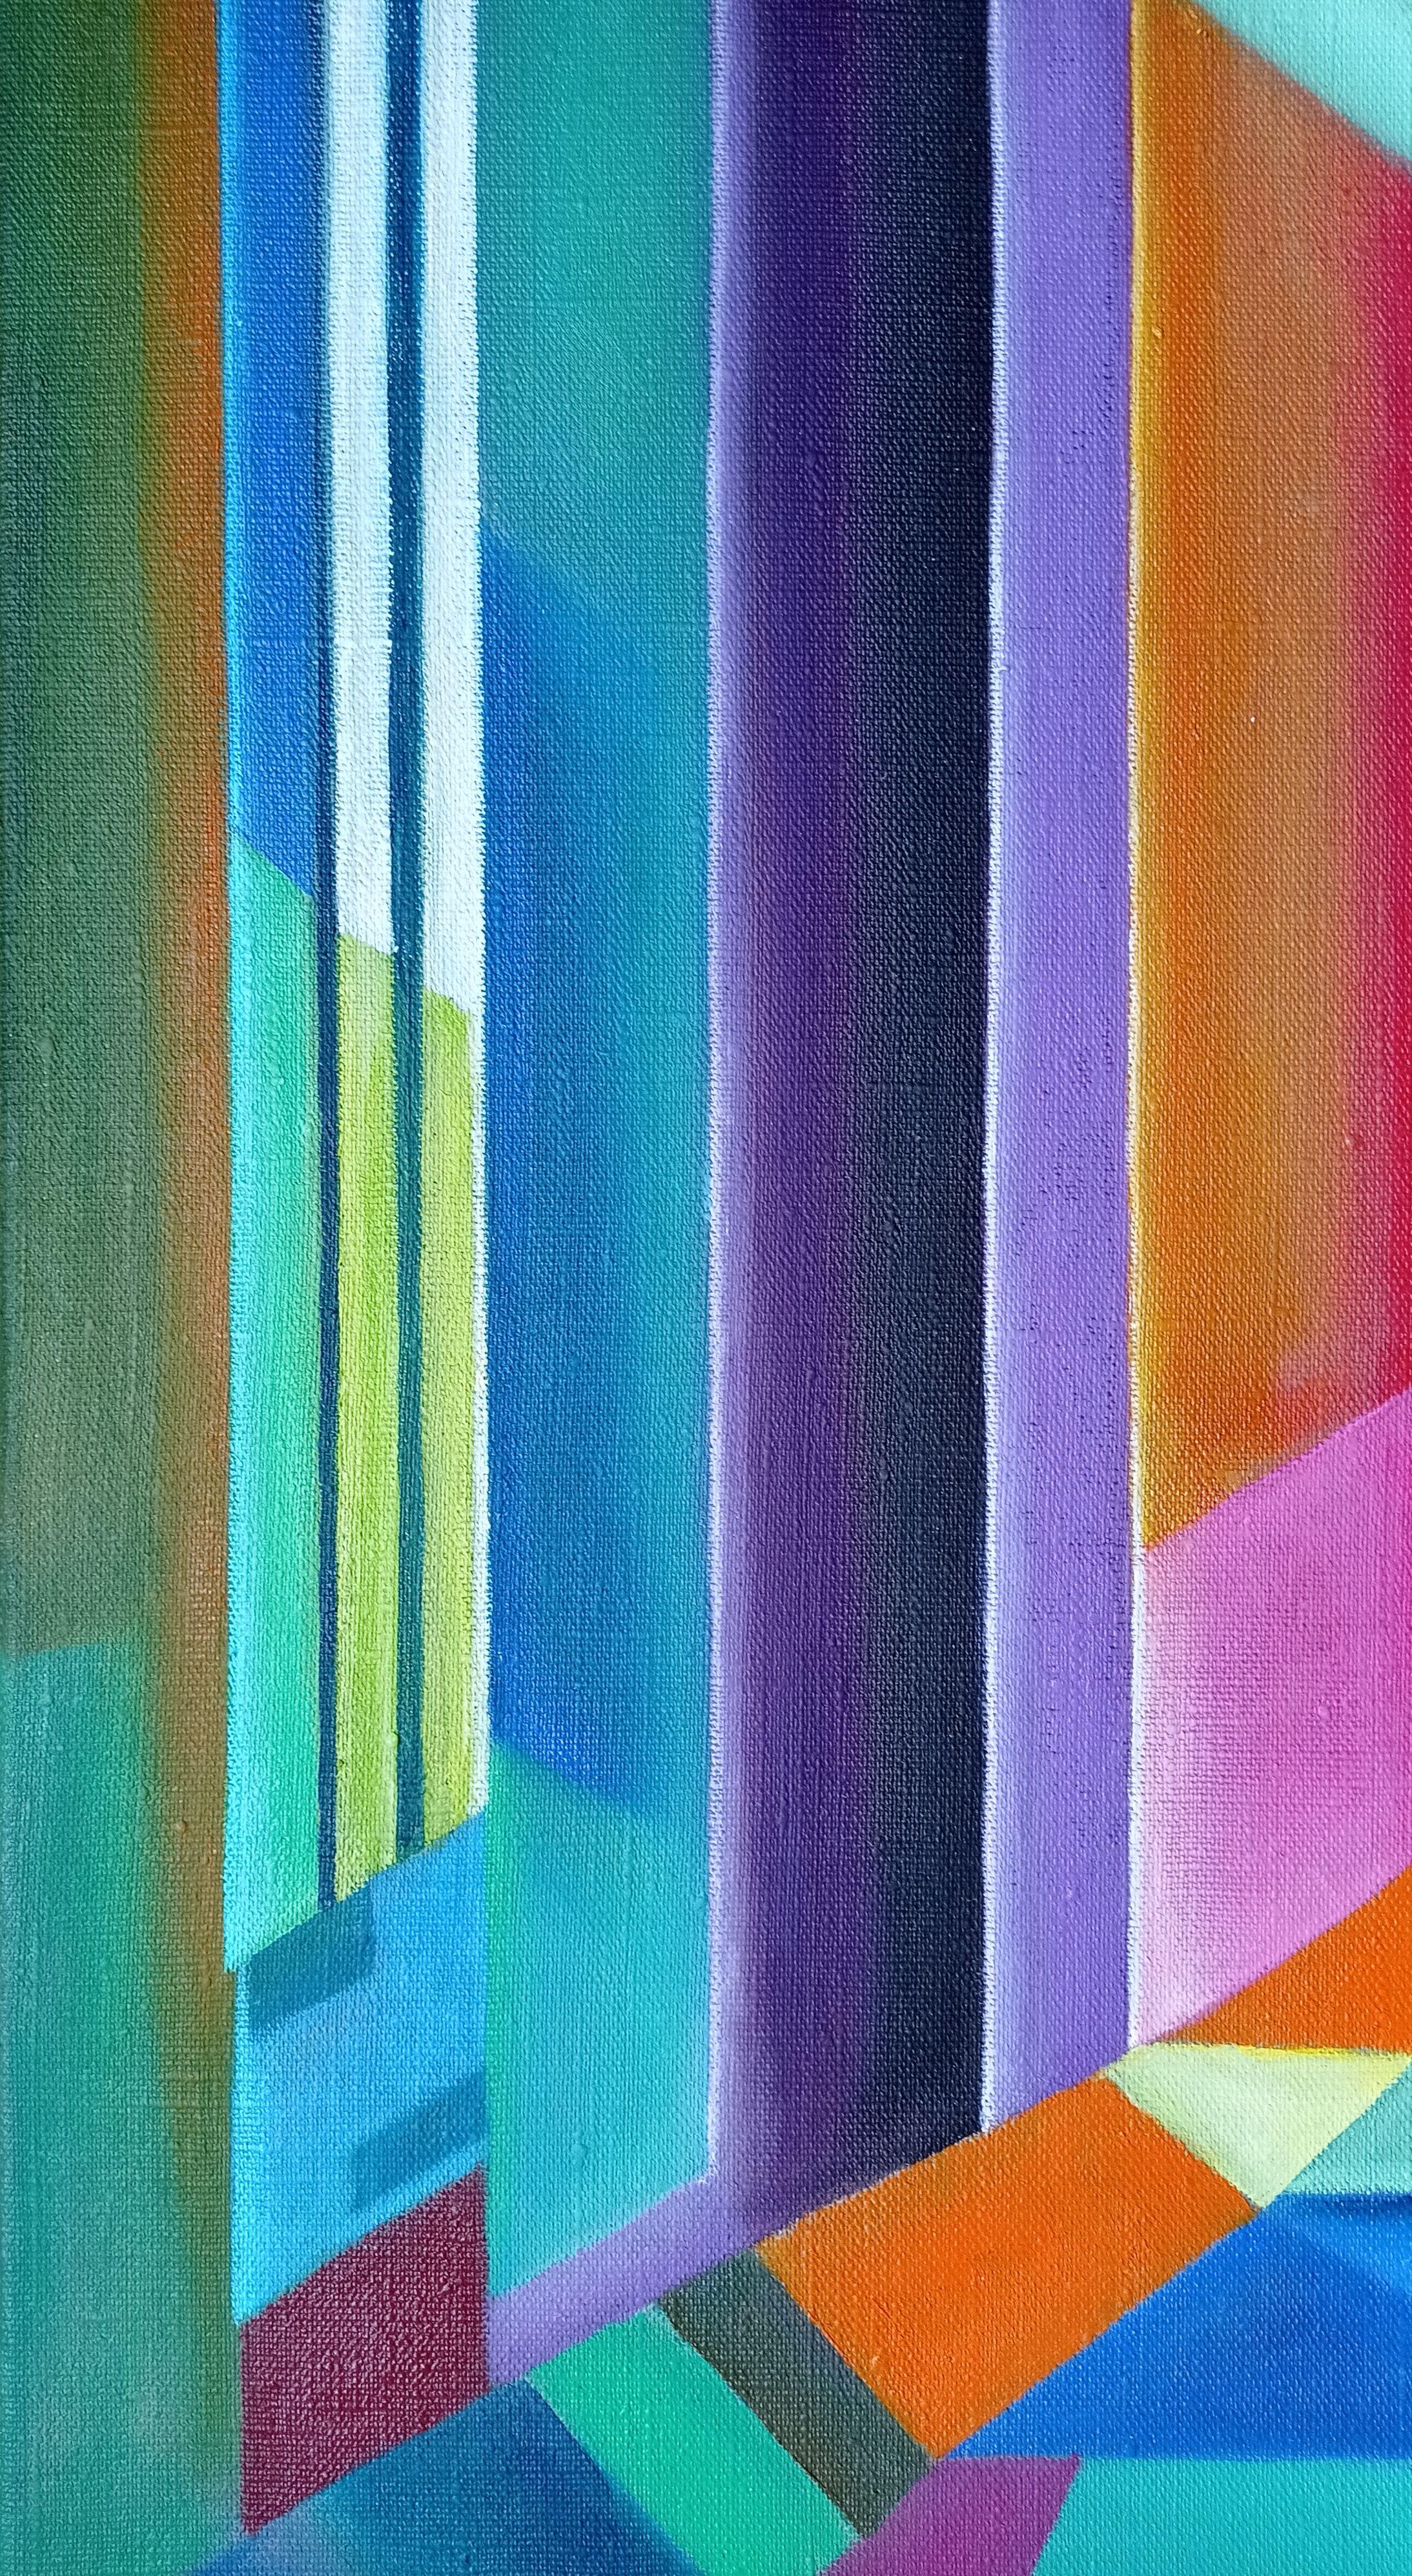 Gates to your dreams. 2023., Öl auf Leinen, 140x120 cm, 4 Teile, 70x60 cm (Geometrische Abstraktion), Painting, von Alyona Prokofjeva